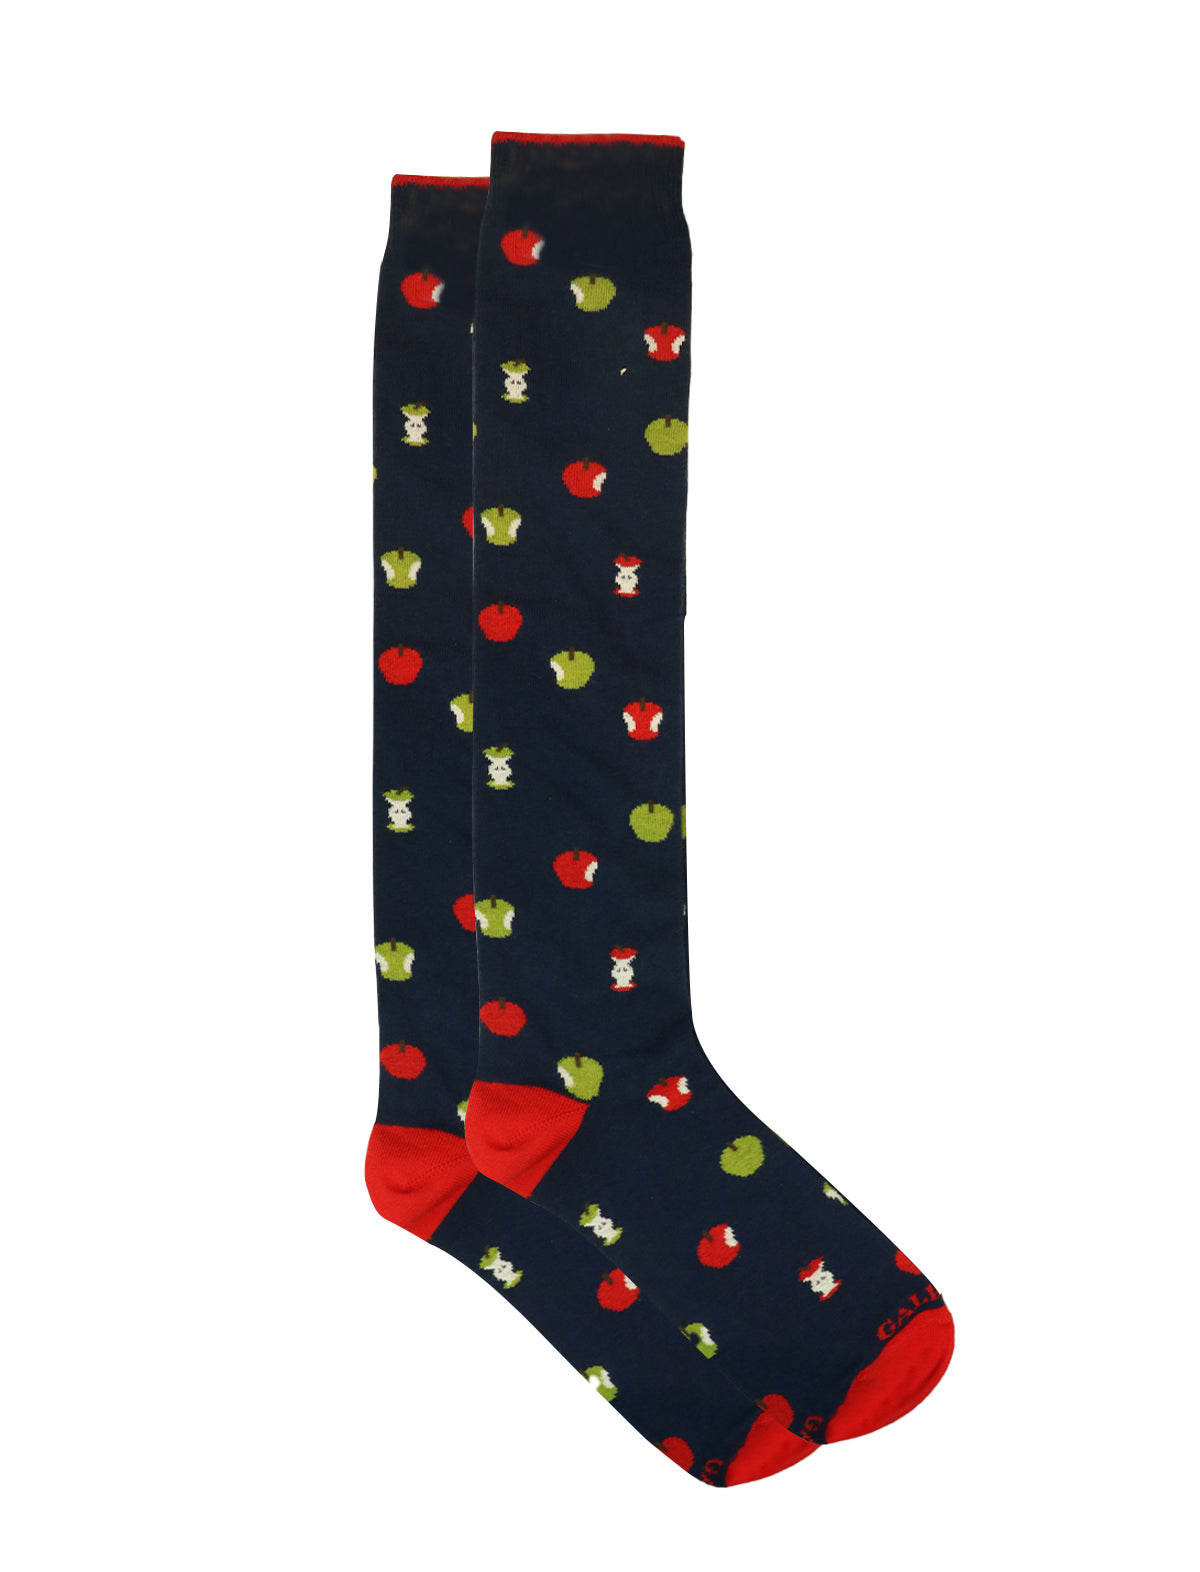 Gallo Long Socks in Navy w/ Apples Print